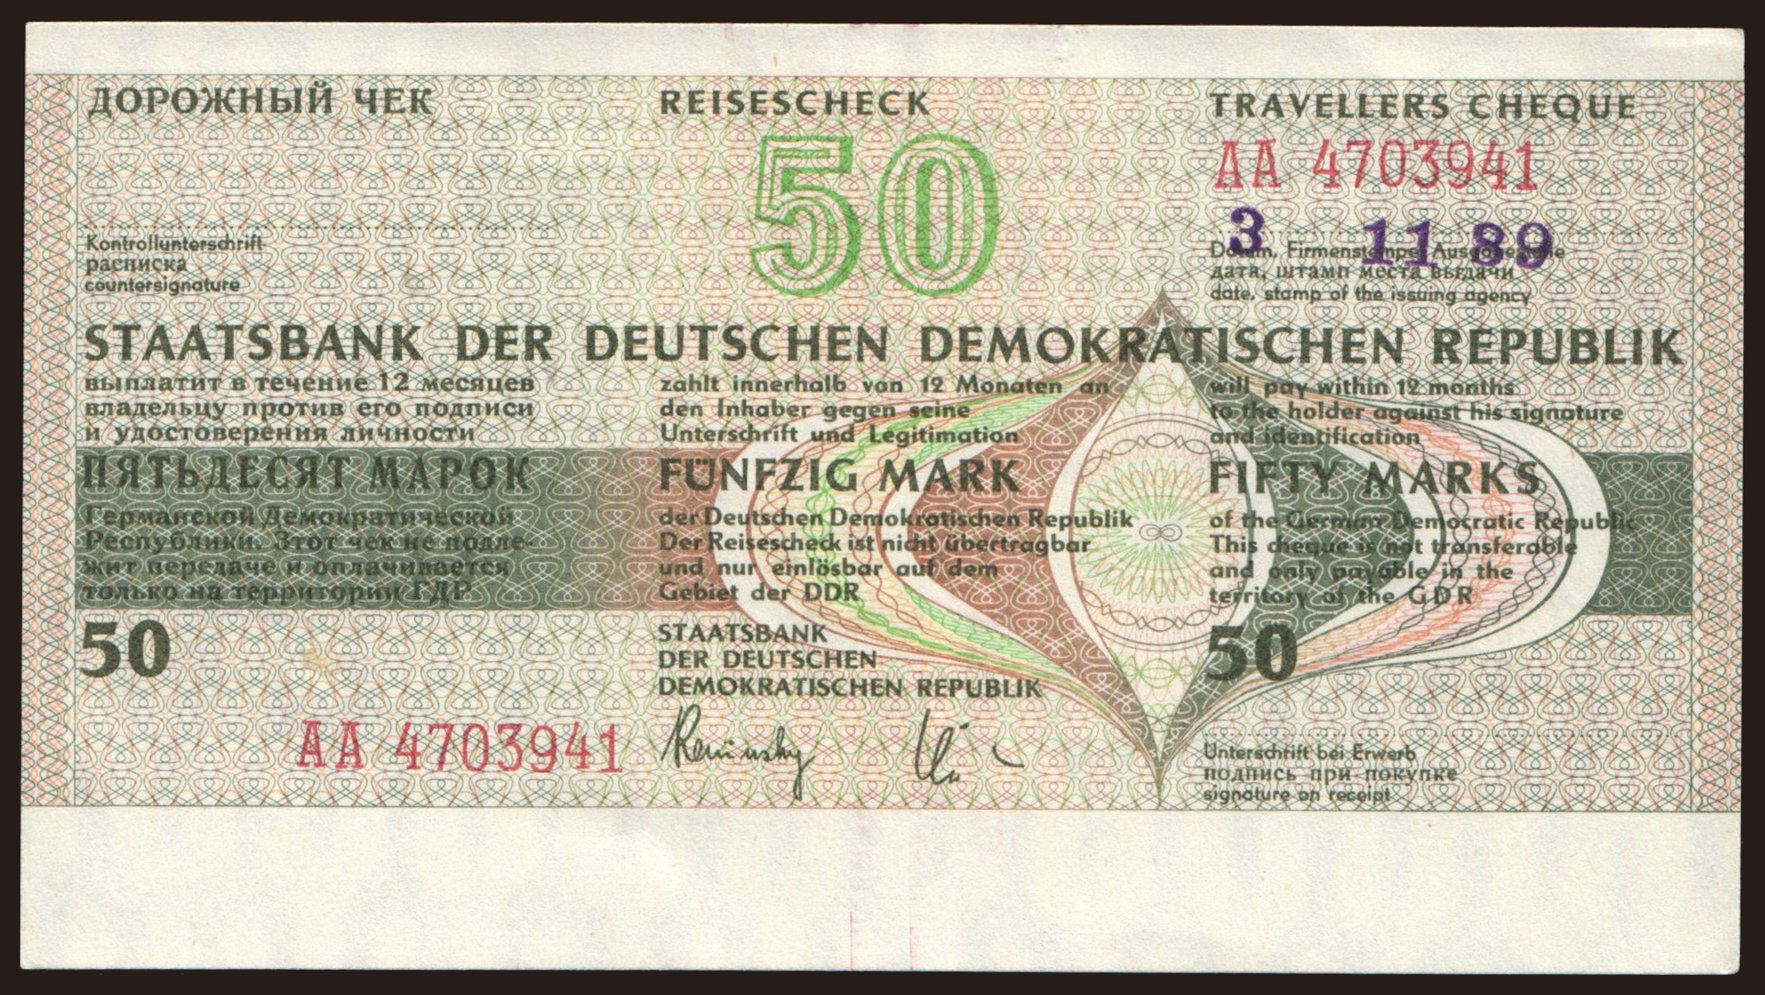 Travellers cheque, Staatsbanj der Deutschen Demokratischen Republik, 50  Mark, 1989 | notafilia-kp.com